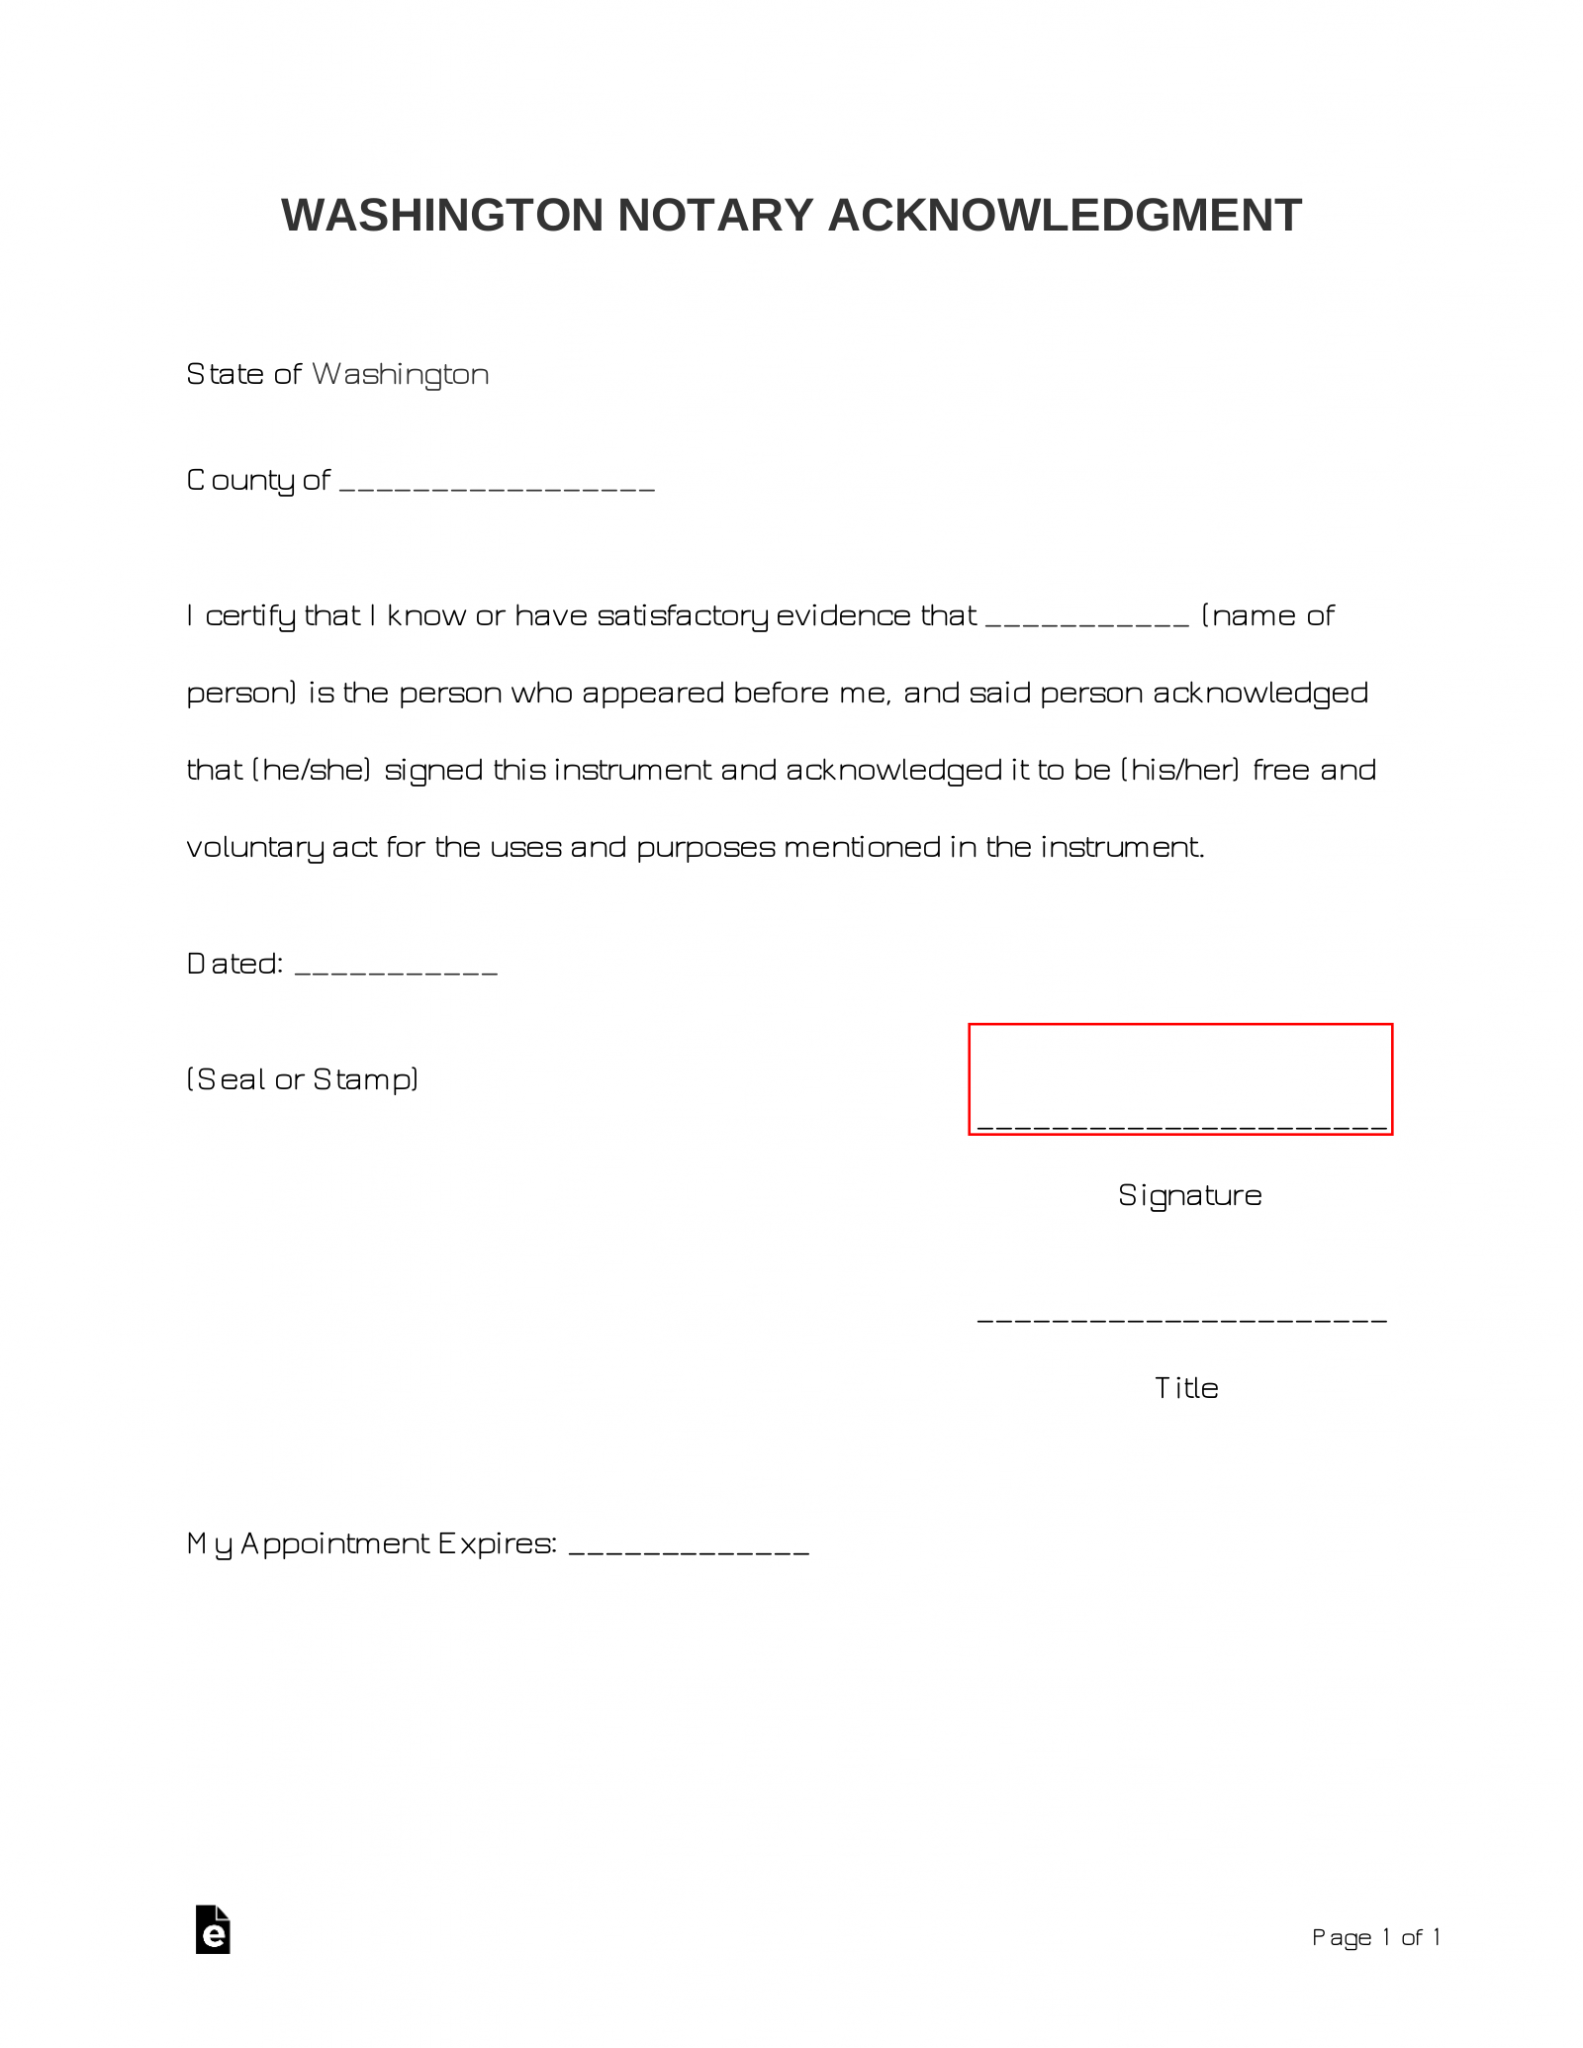 free-washington-notary-acknowledgment-form-pdf-word-eforms